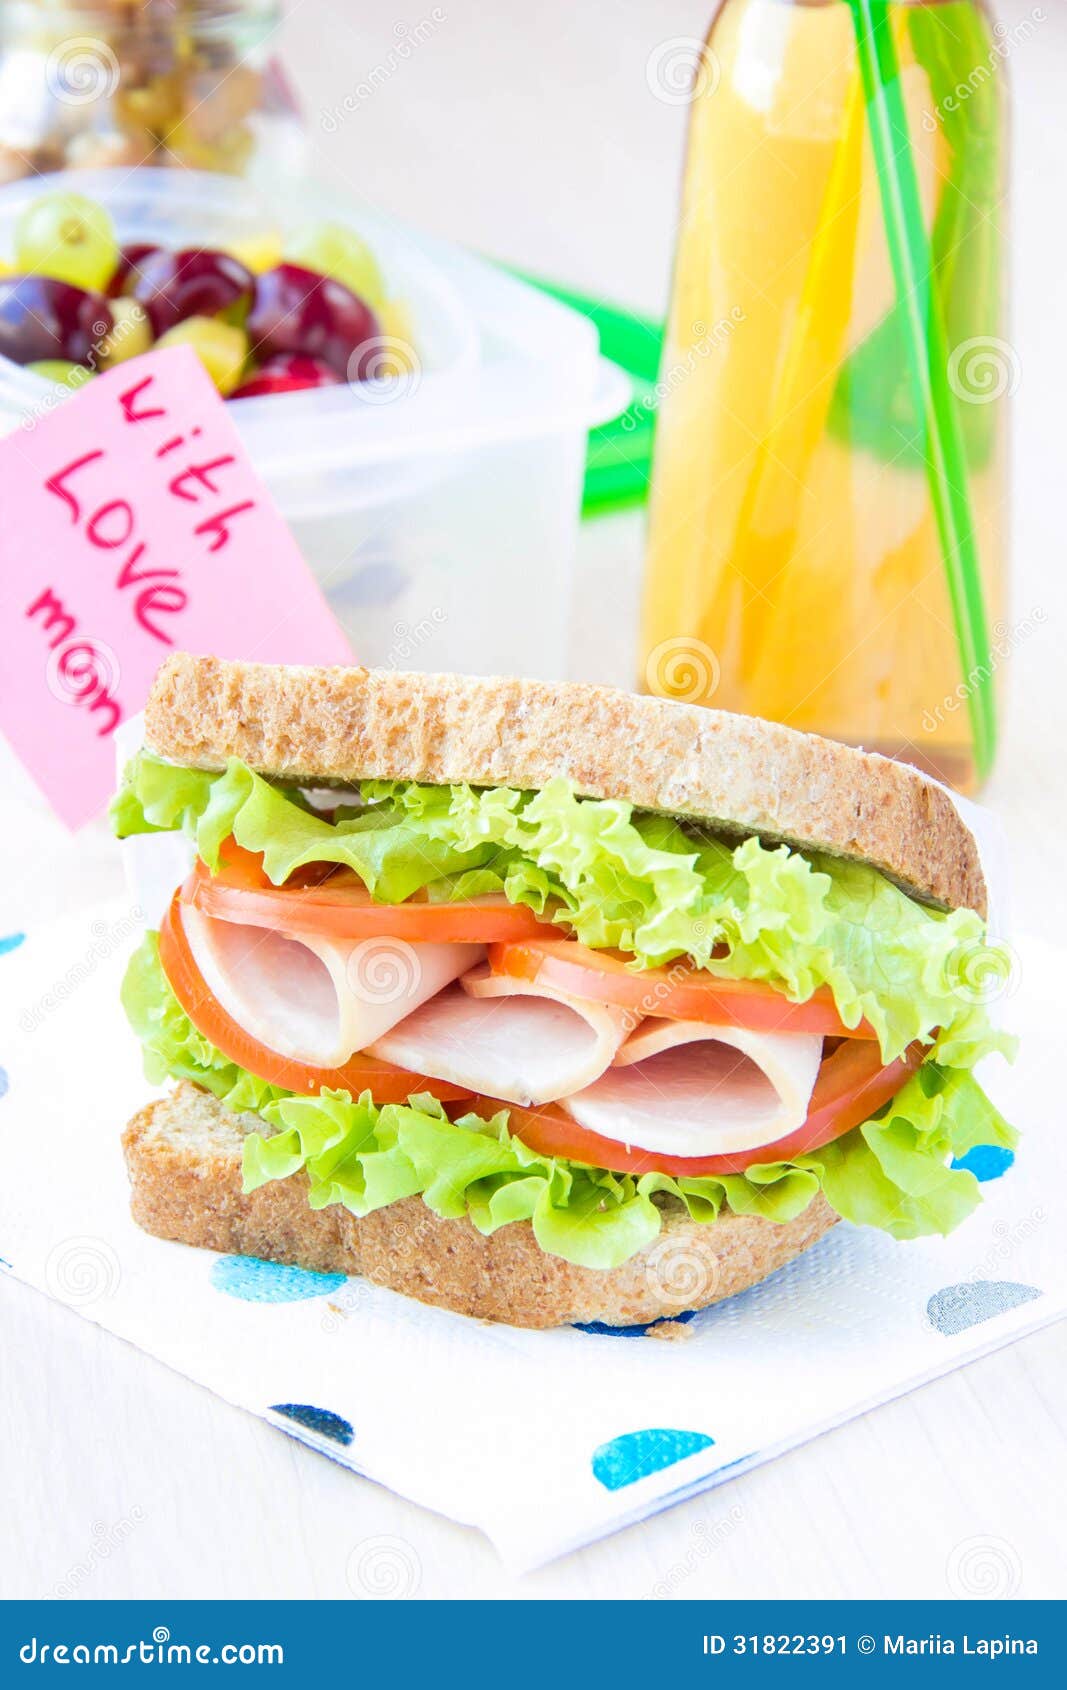 School breakfast apple fruit sandwich thermos flask. - Stock Image -  Everypixel